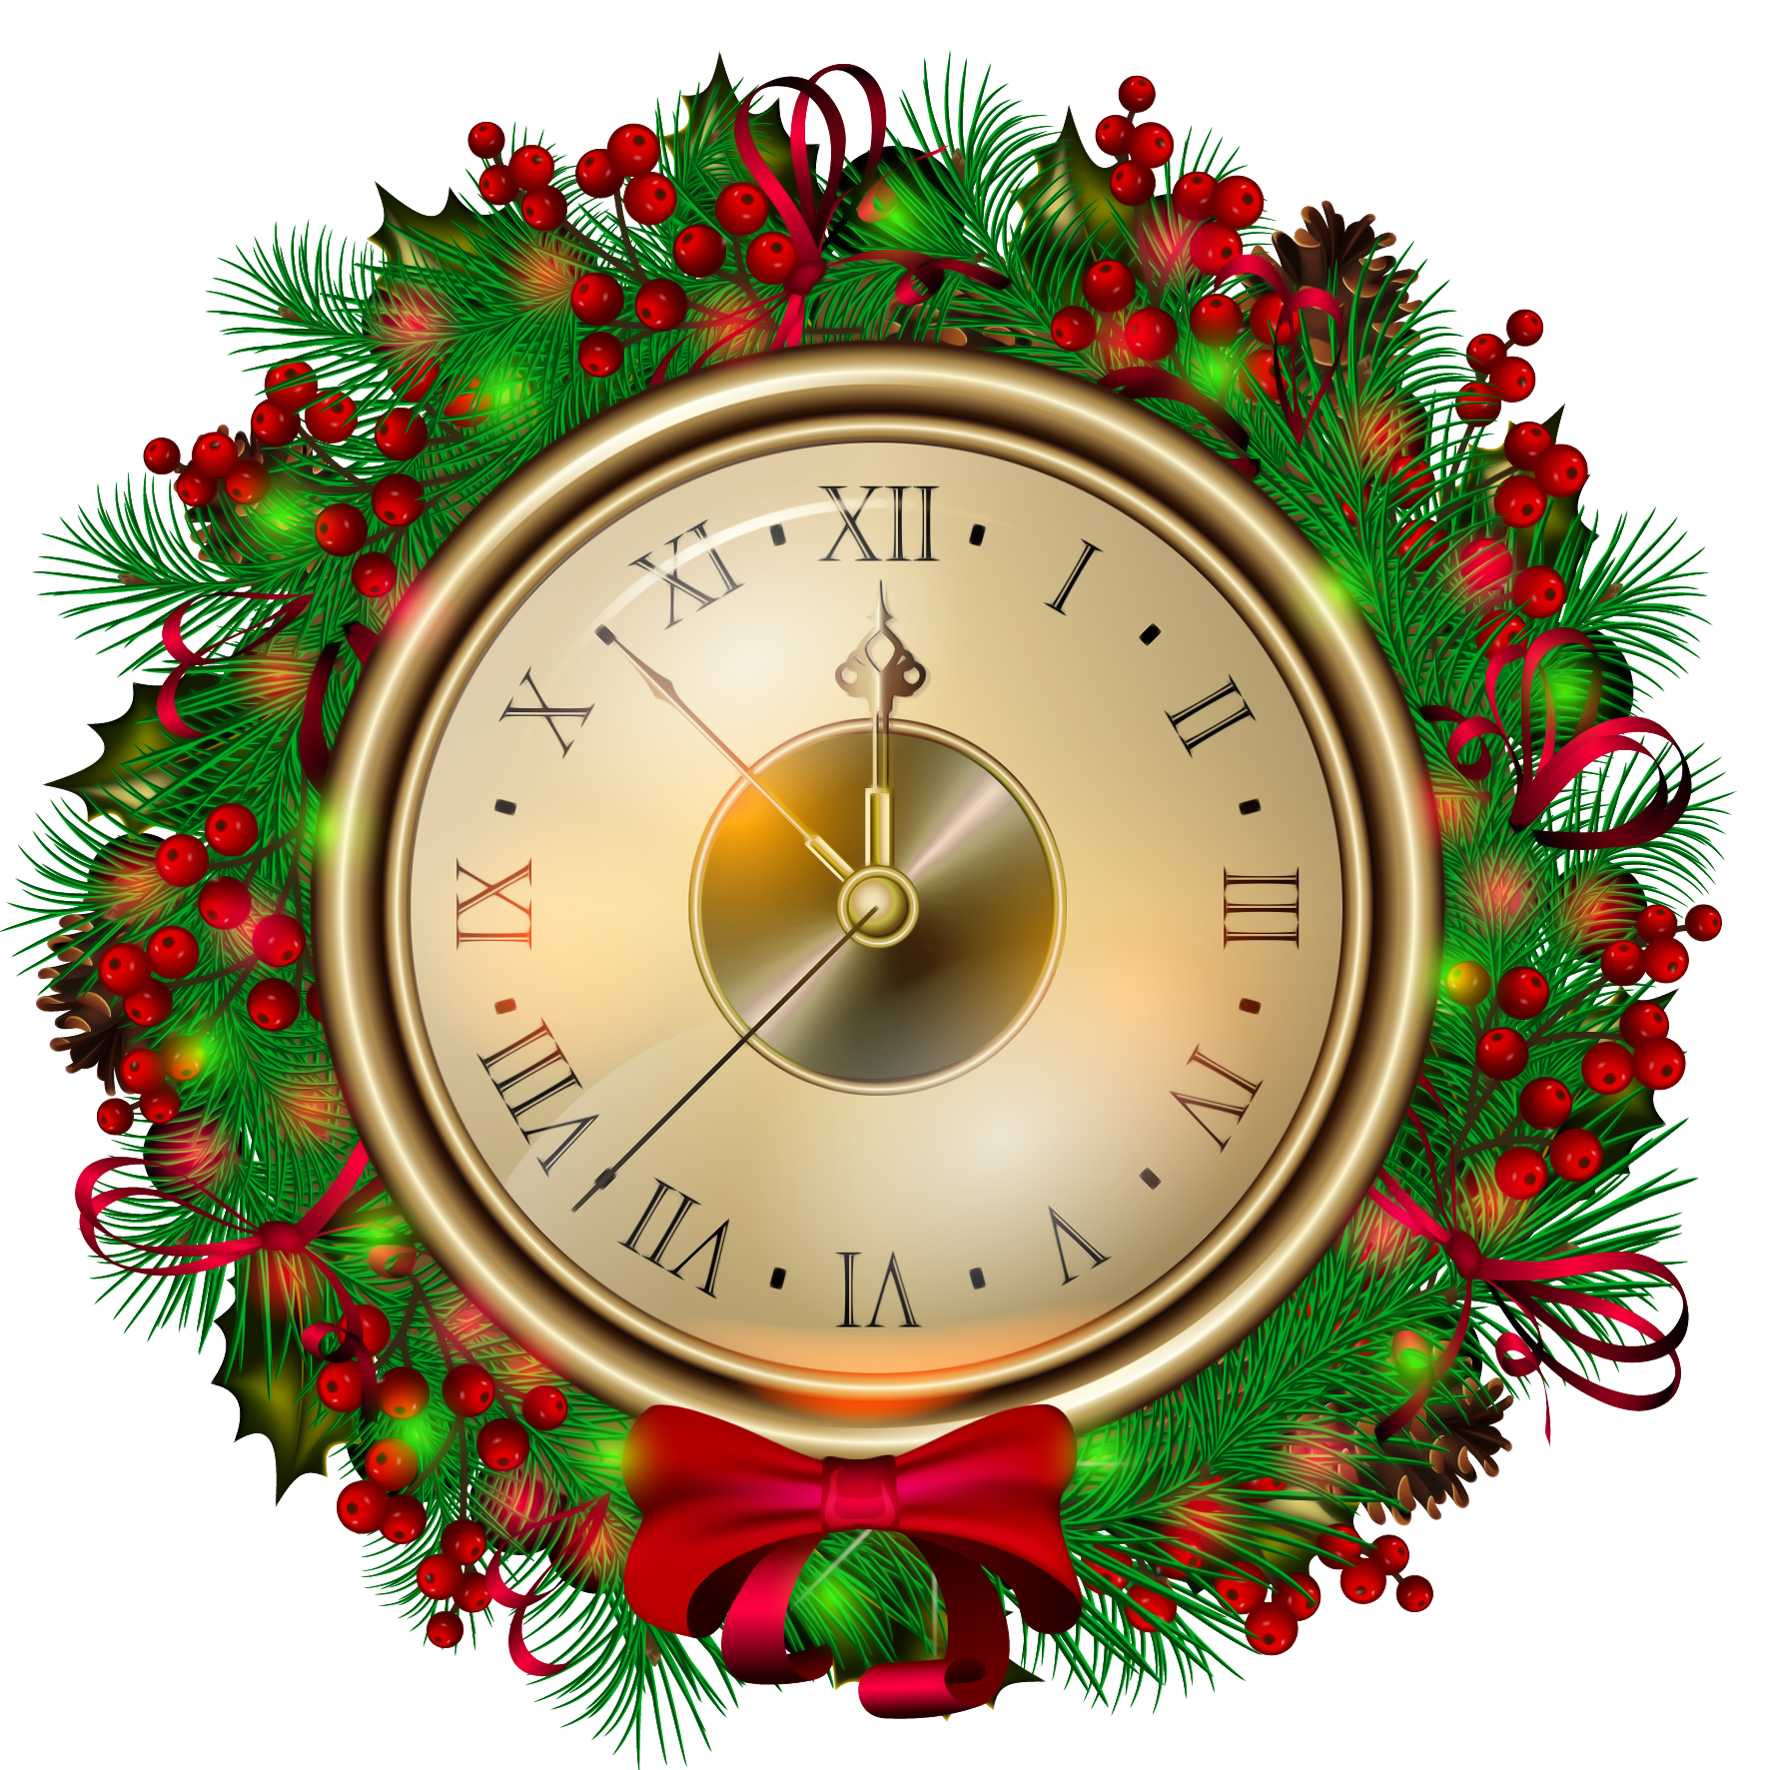 Transparent Christmas Clock PNG Clipartt | Gallery ...
